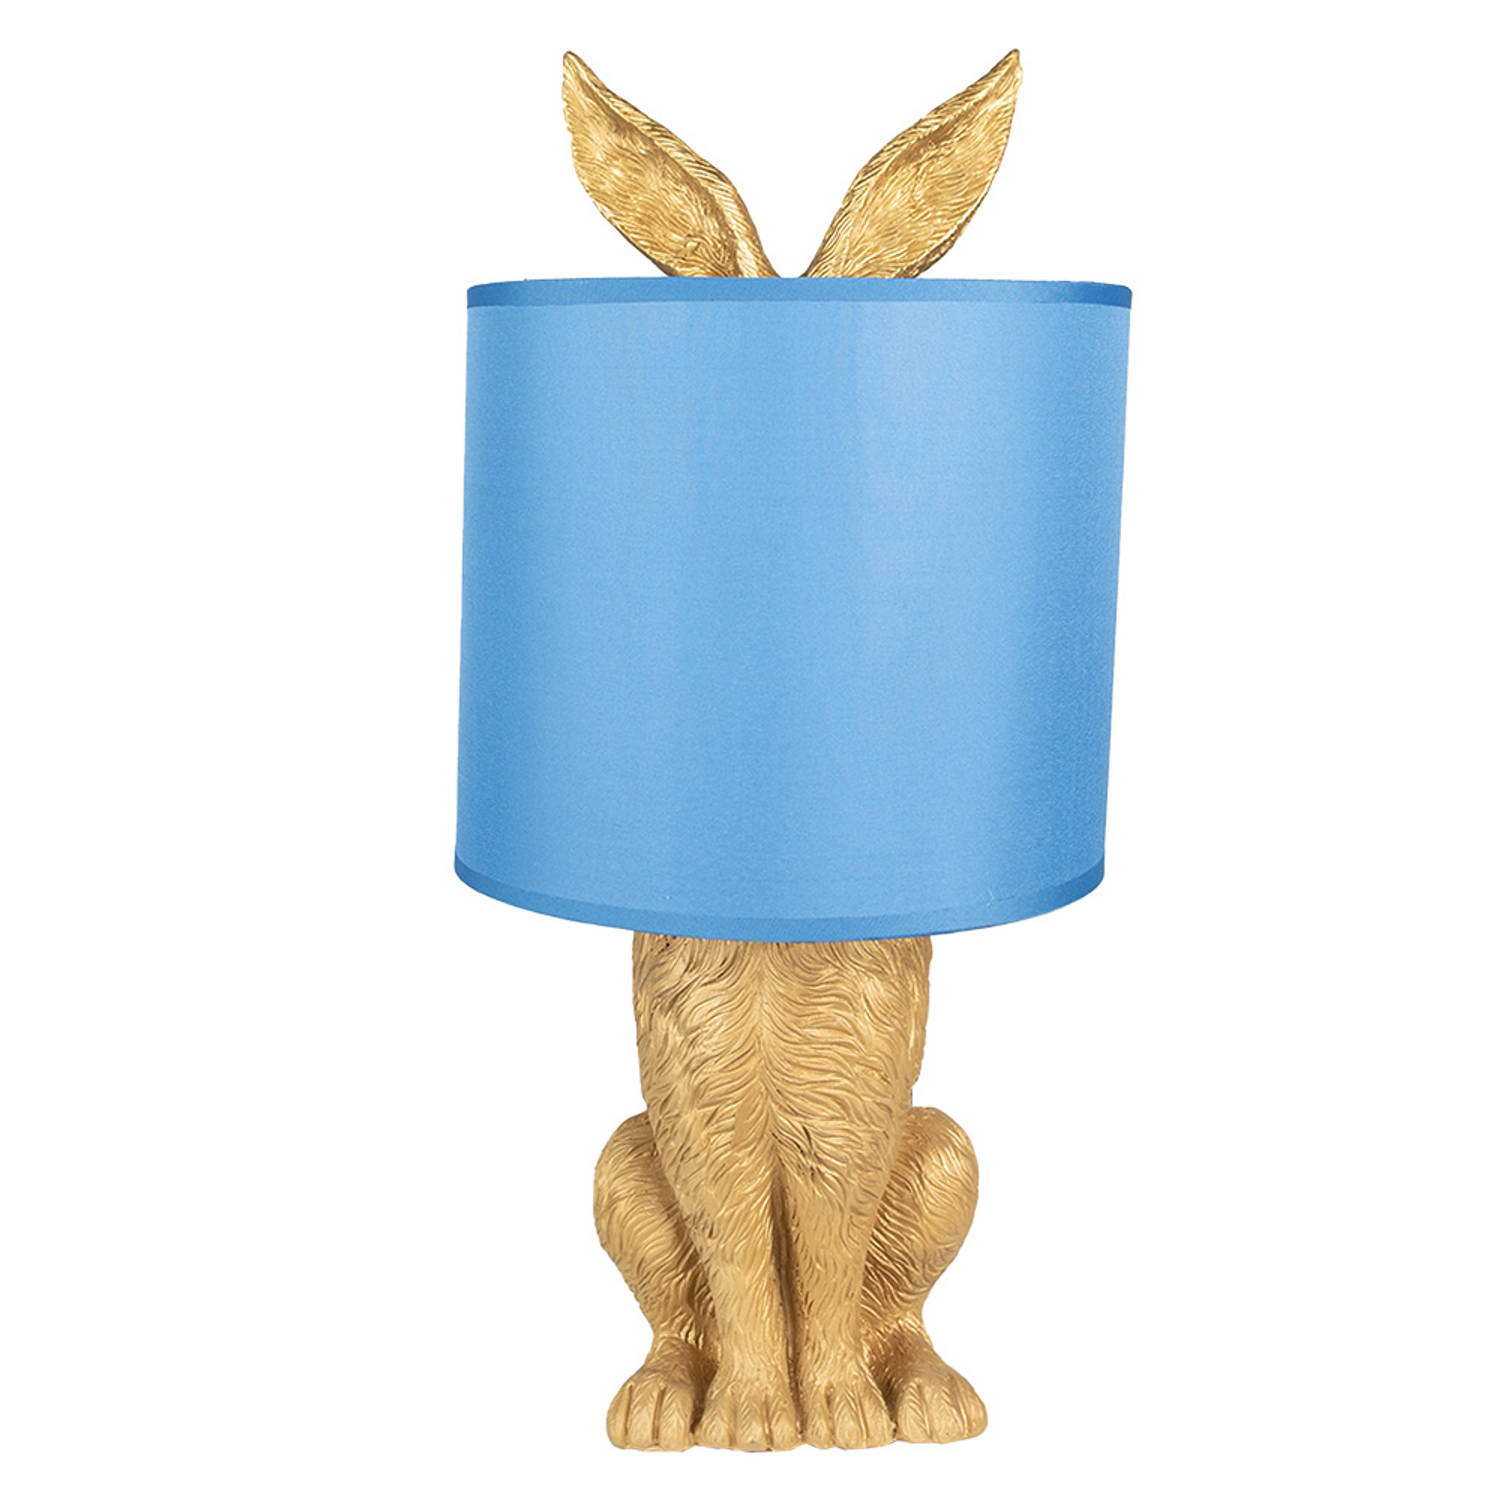 HAES DECO Tafellamp City Jungle Konijn in de Lamp, Ø 20x43 cm Goud-Blauw Bureaulamp, Sfeerlamp, Nach